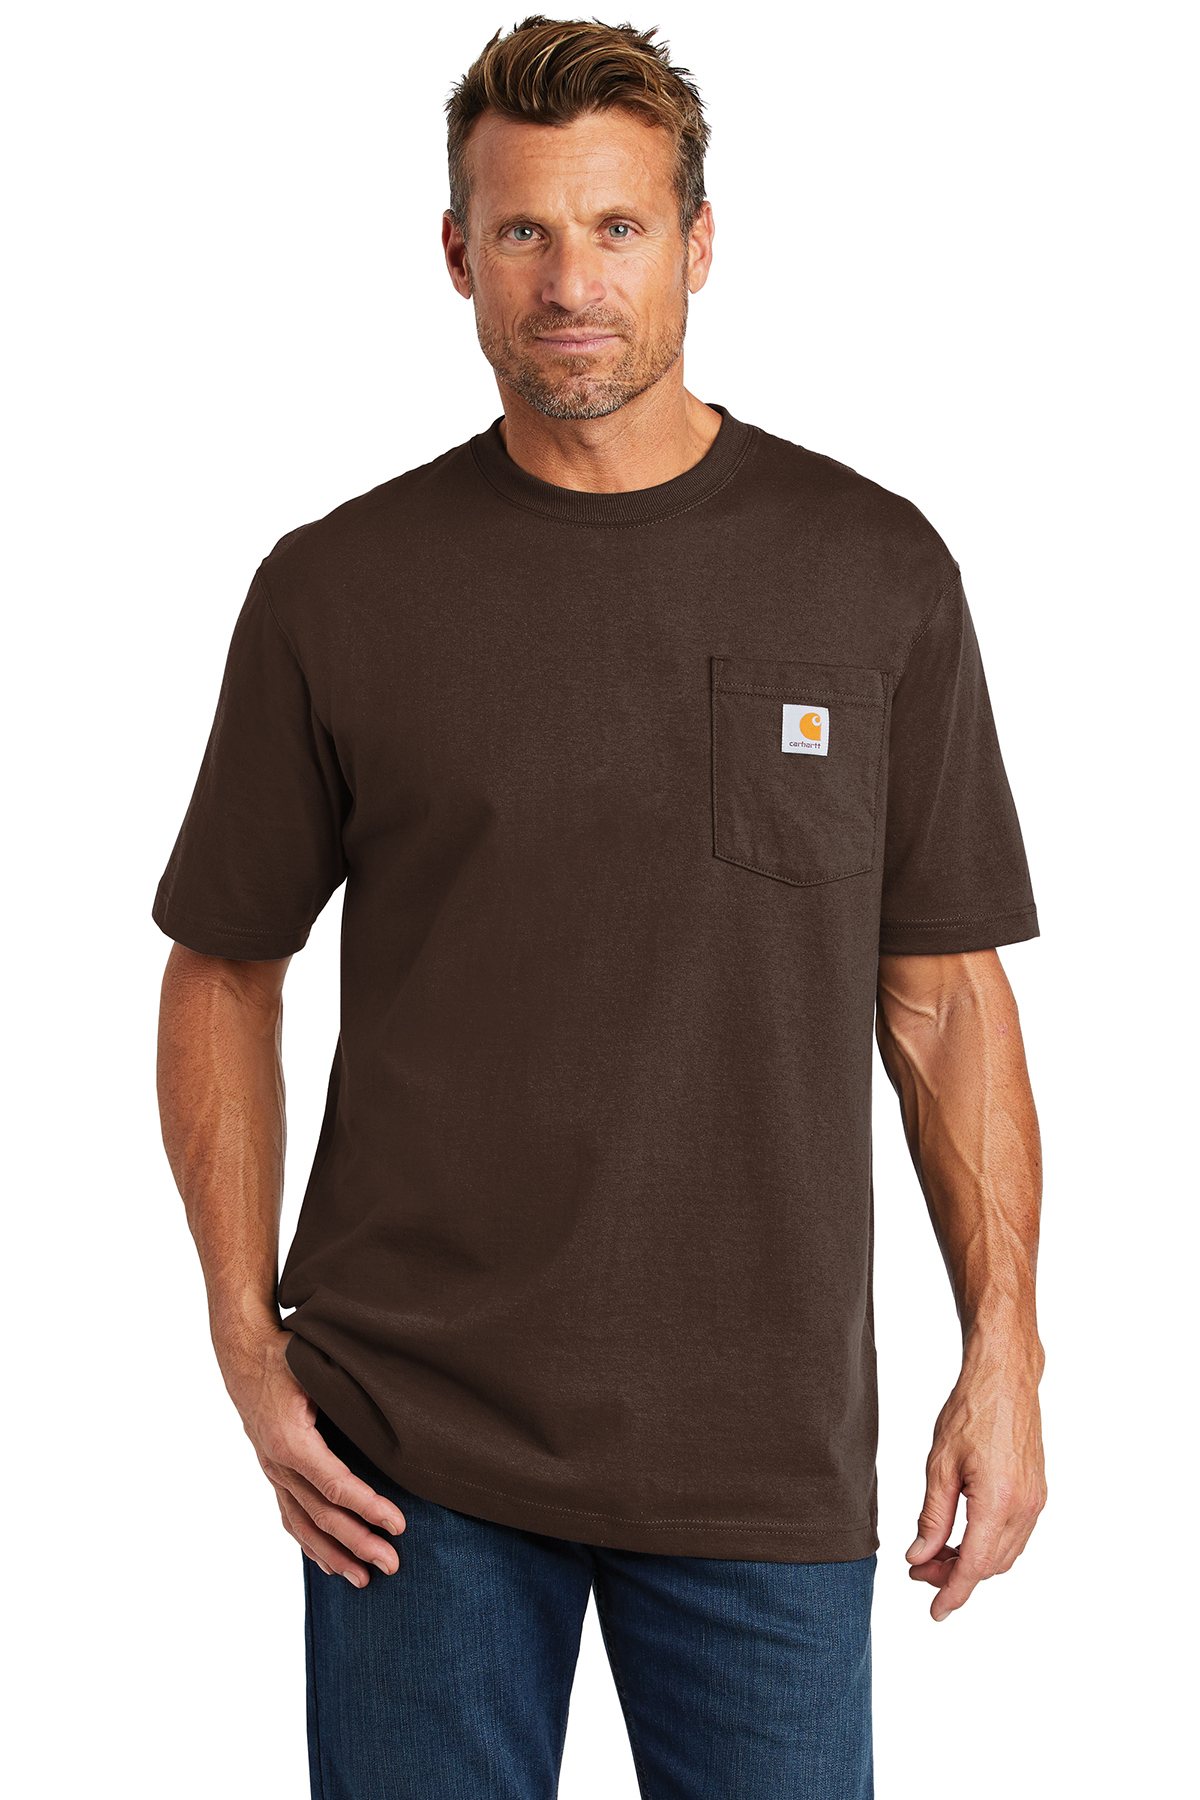 Product Sleeve SanMar | Pocket T-Shirt Carhartt Workwear Short |